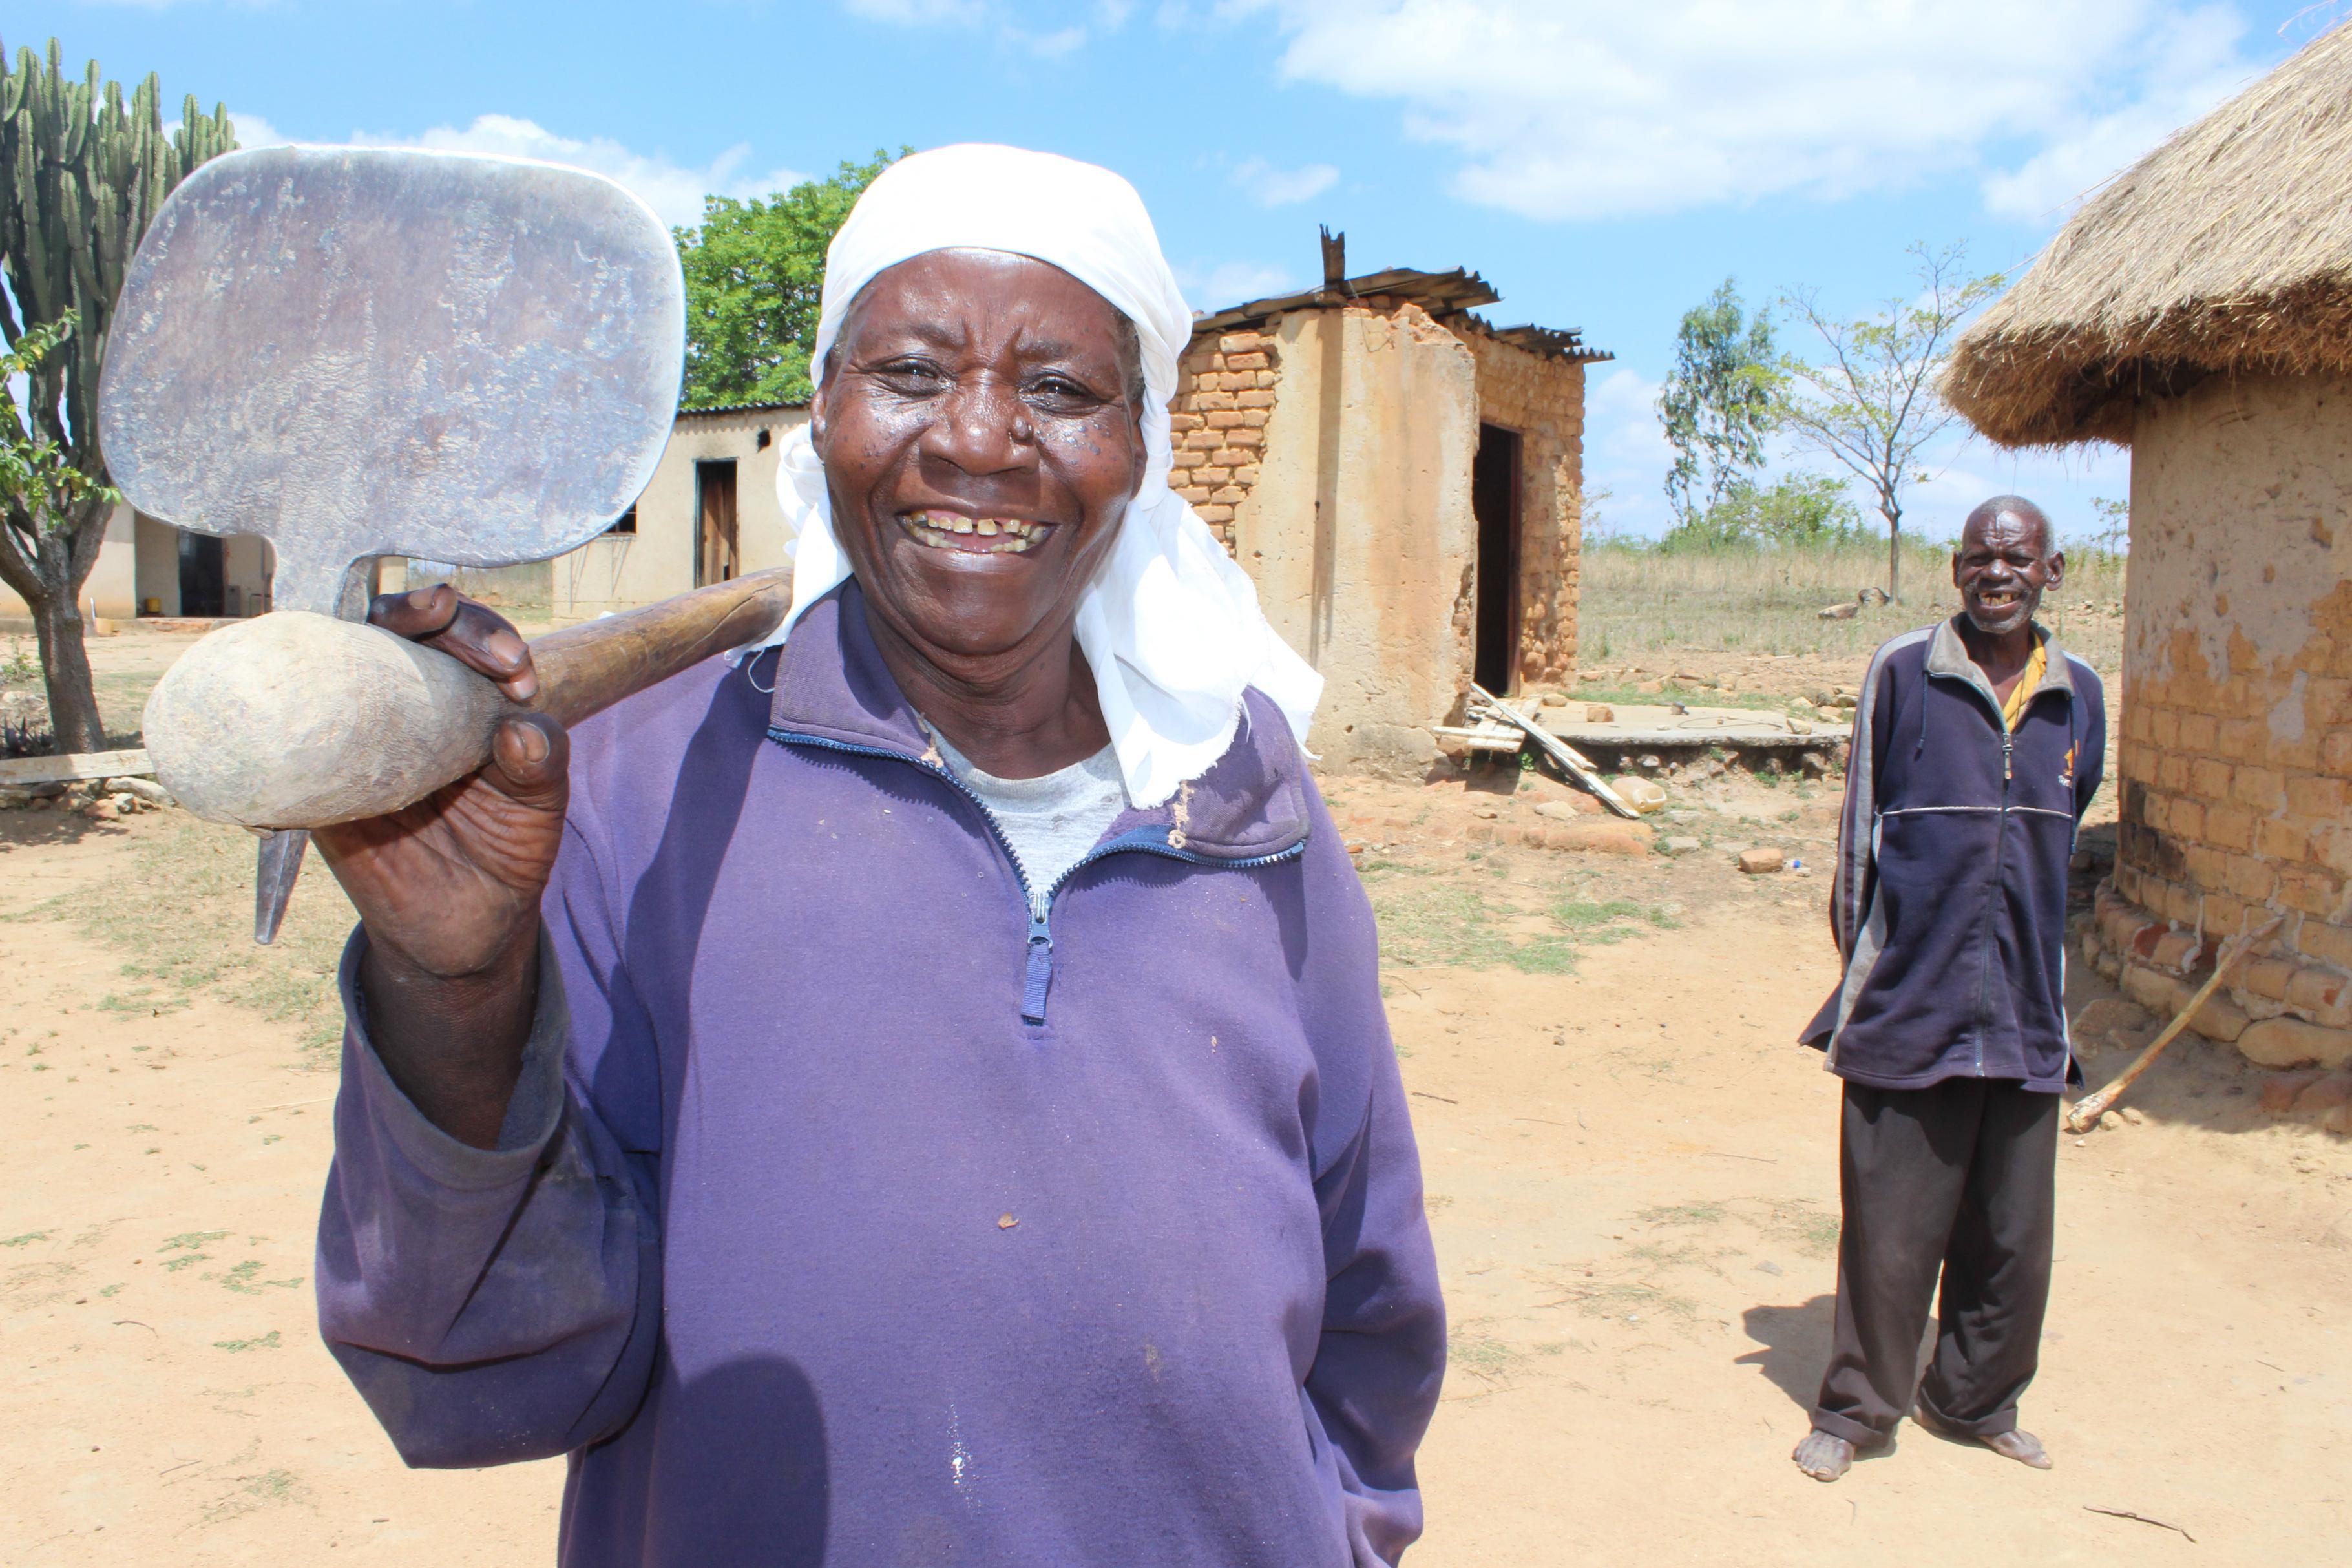 Die 71-jährige Florence Mahove aus Simbabwe mit ihrem Ehemann